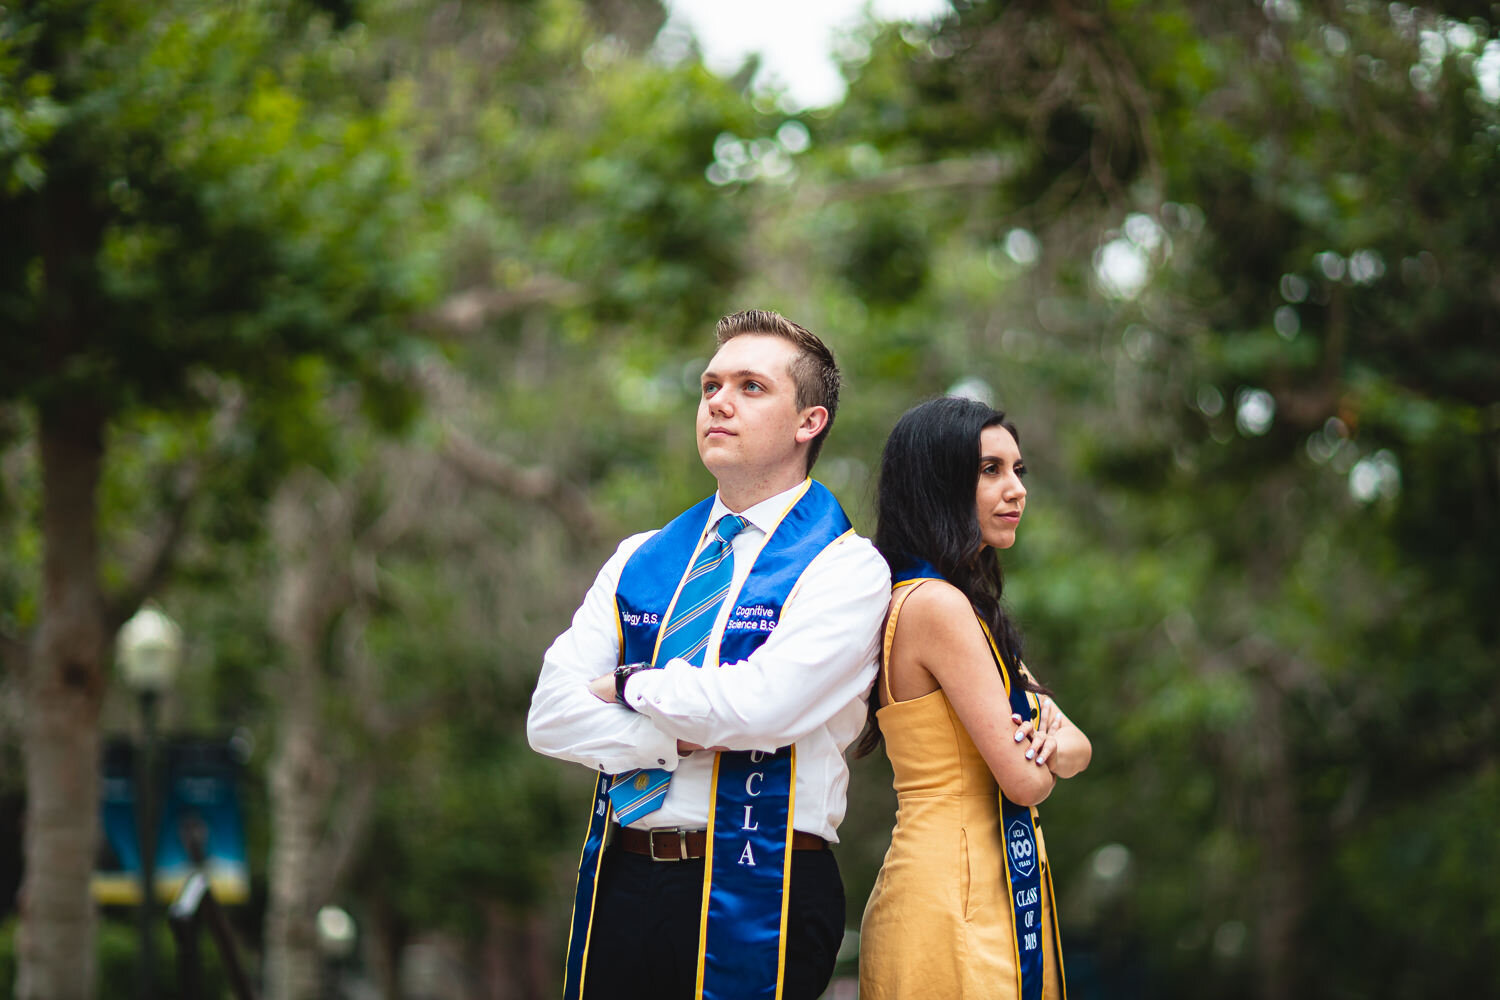 Los Angeles Senior Graduation Portrait Photography – Best UCLA Graduation Photos and Couples Sessions by Nick Lie Photography